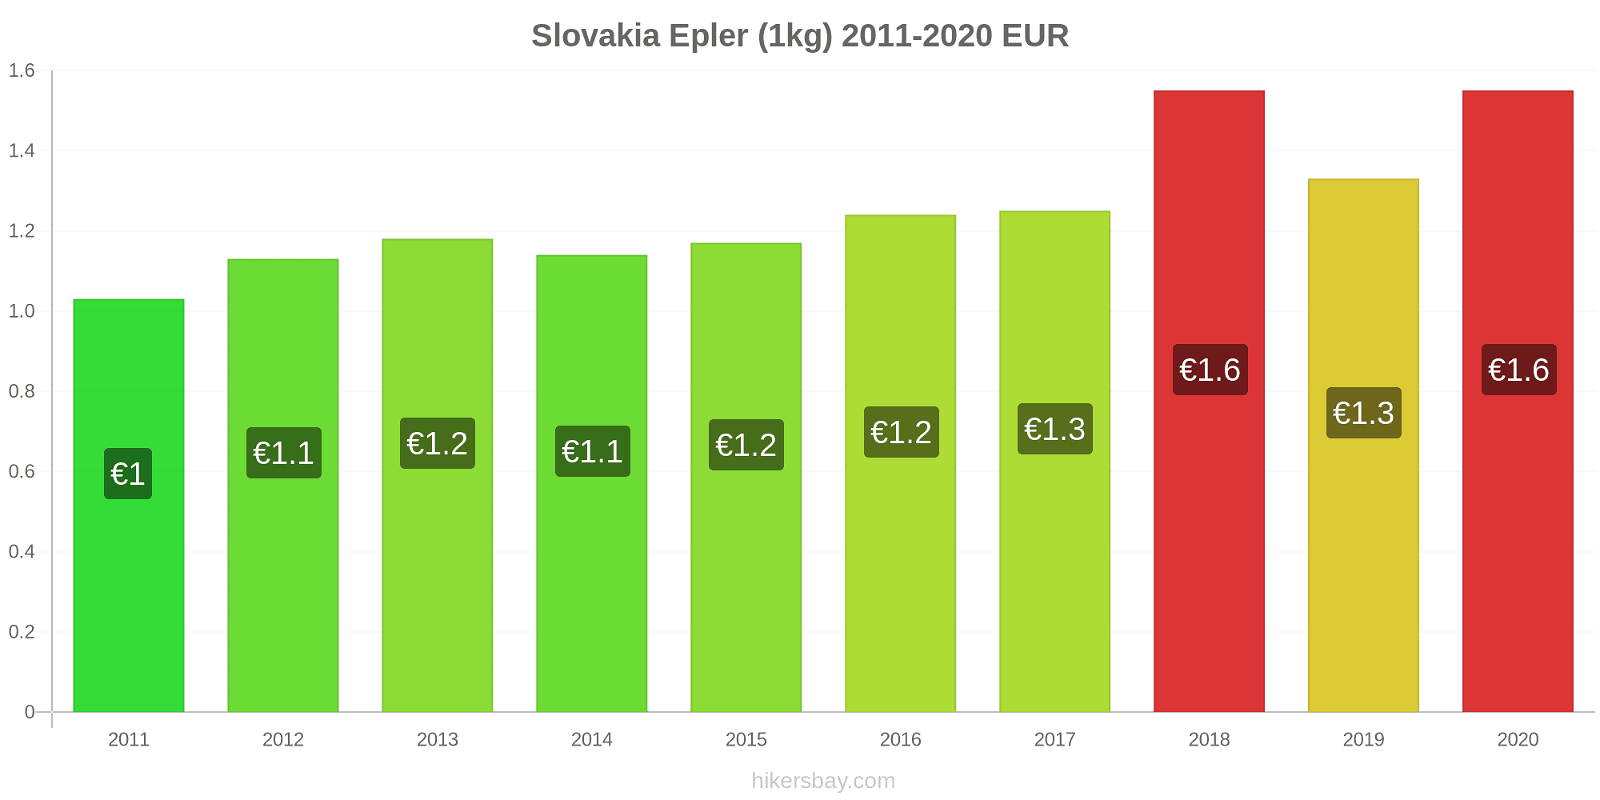 Slovakia prisendringer Epler (1kg) hikersbay.com